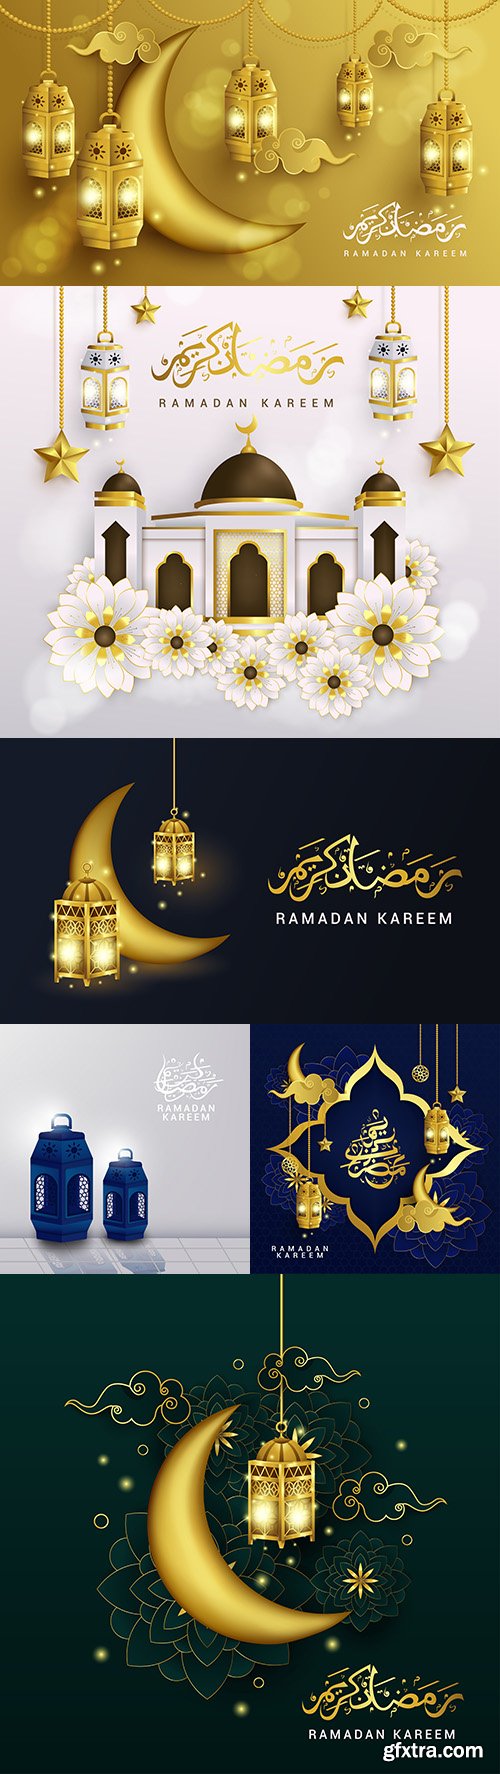 Luxury Ramadan Kareem banner design illustrations